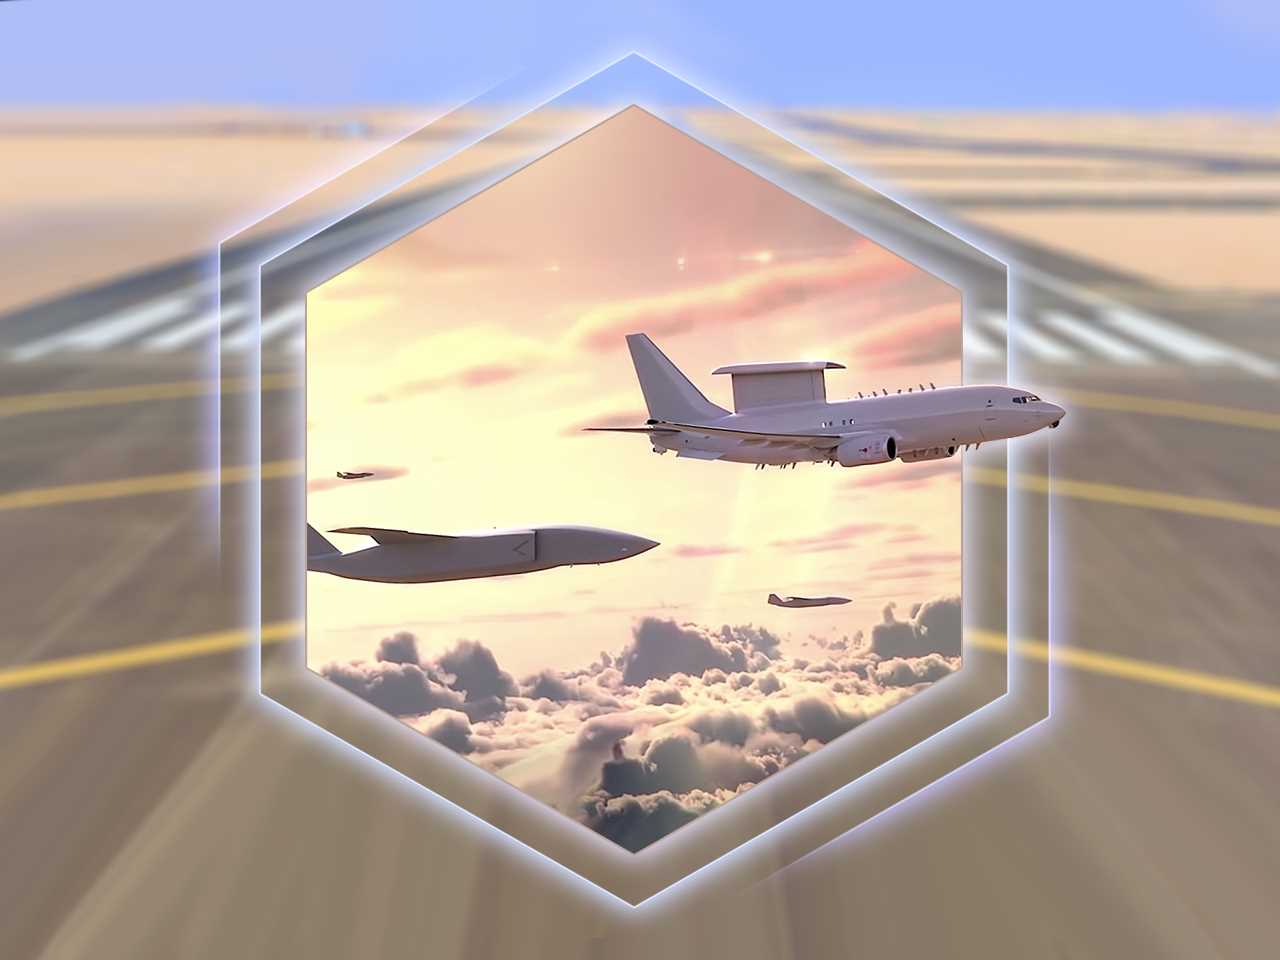 LG_MAGAZINE_Banner_Airpower_Teaming (6).jpg